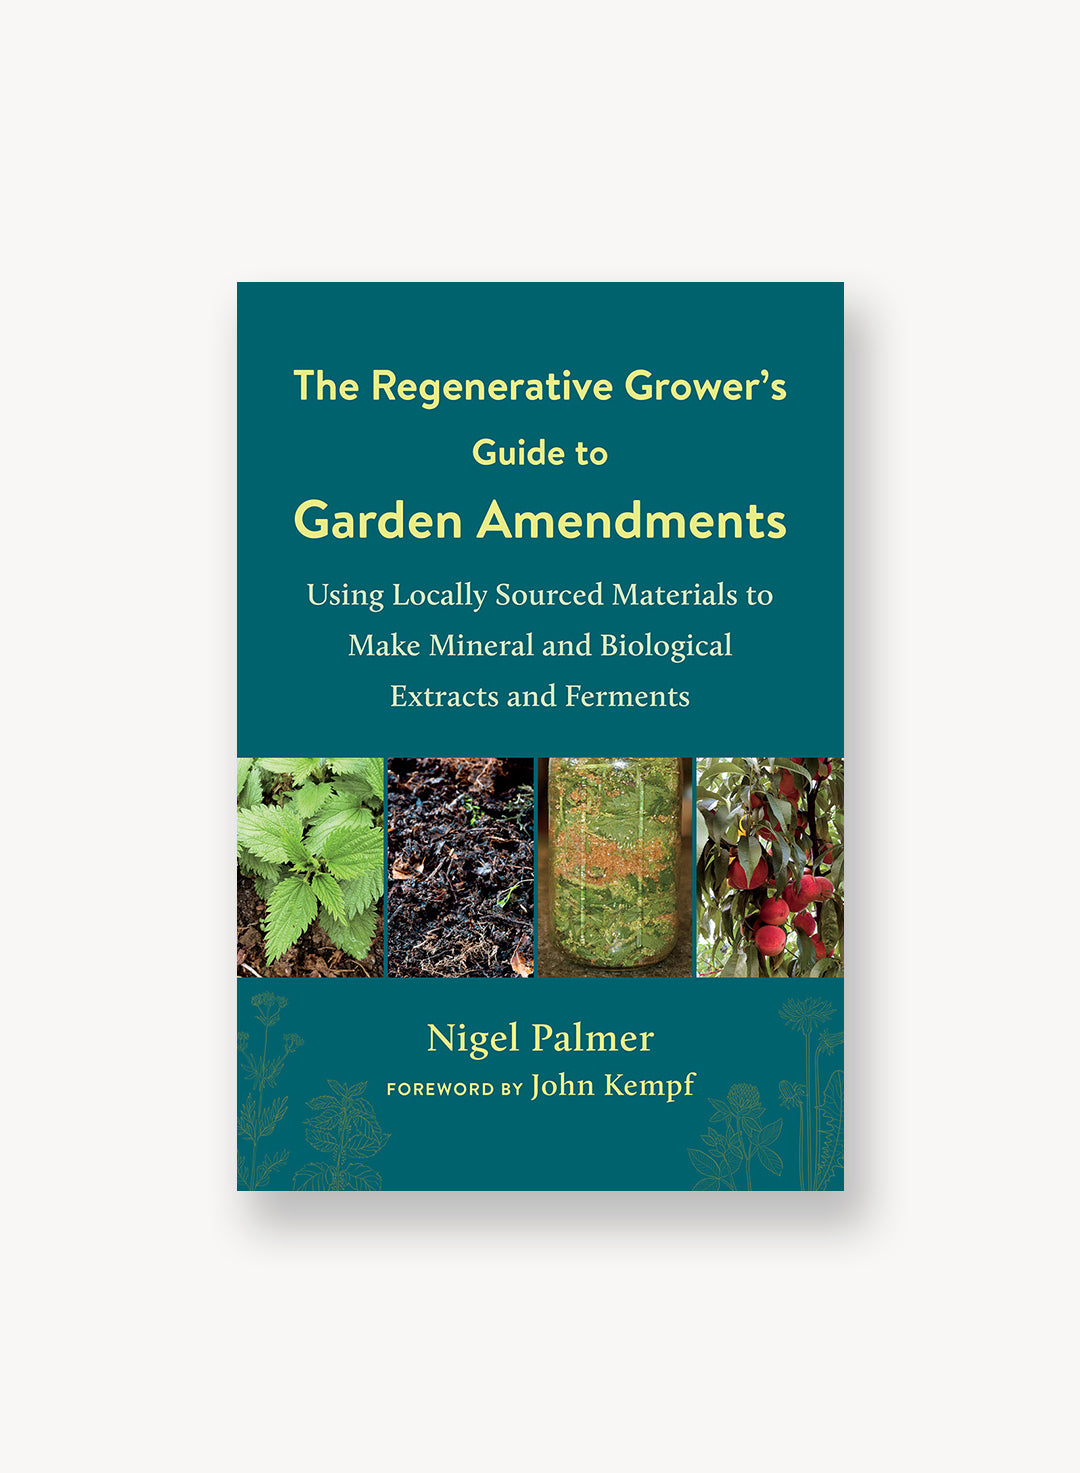 The Regenerative Grower’s Guide to Garden Amendments